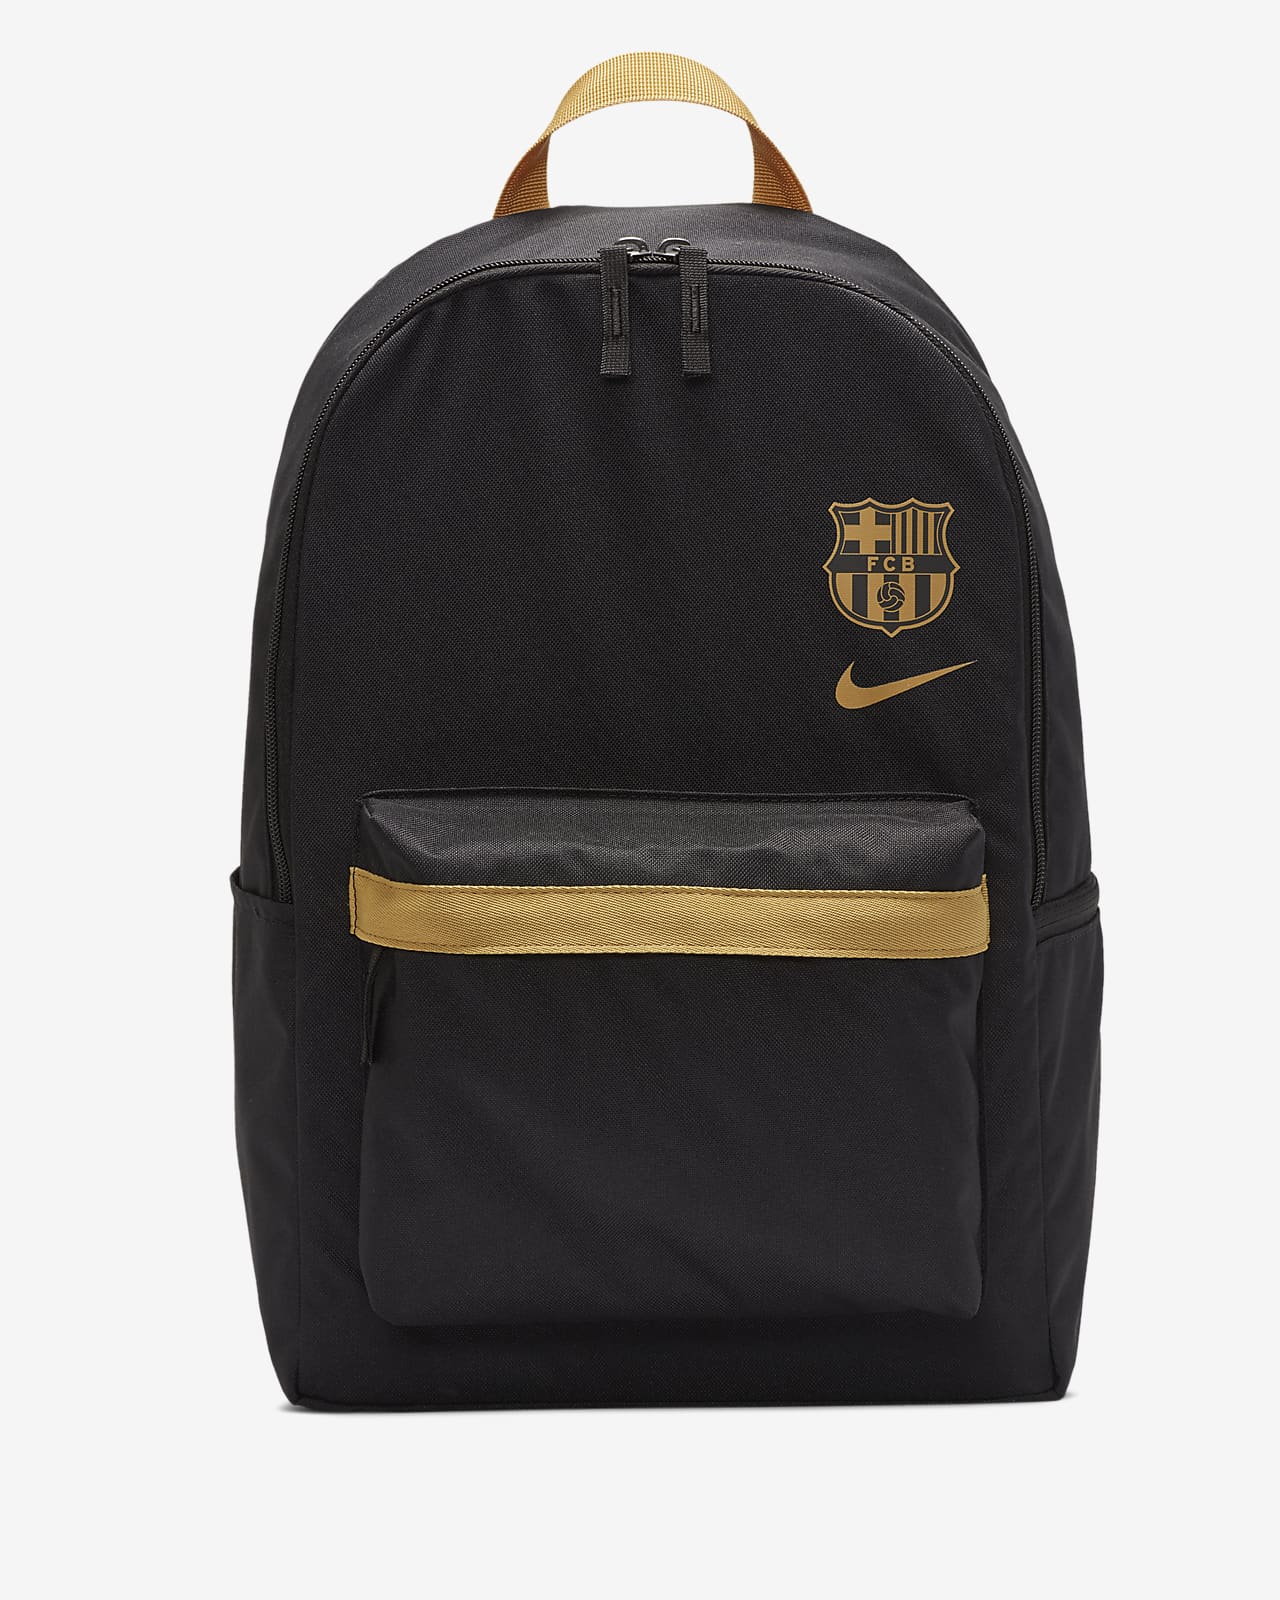 gregory cairn backpack